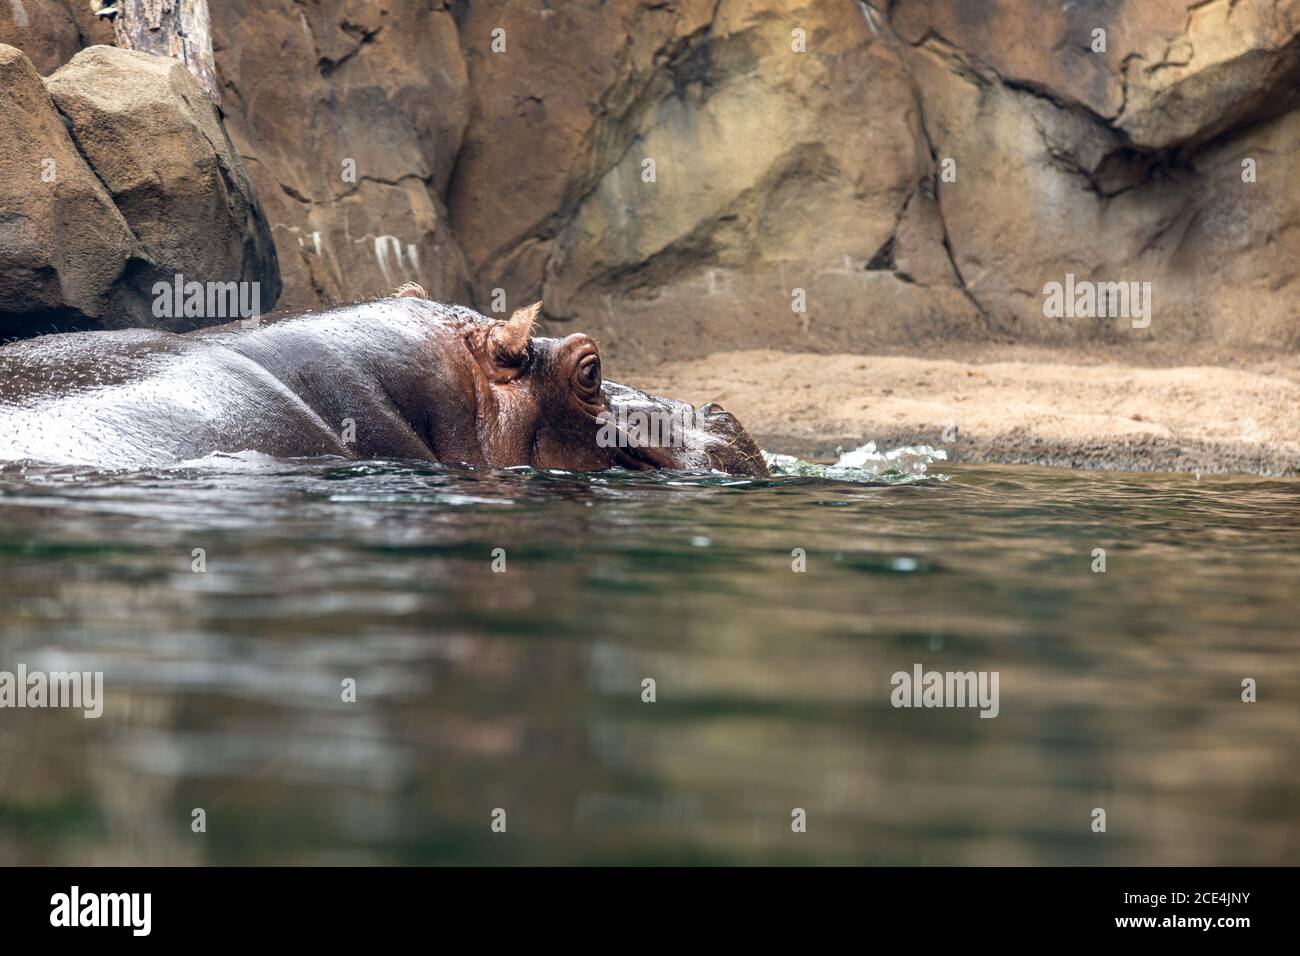 A hippopotamus glides through the water of his enclosure at the Cincinnati Zoo. Stock Photo